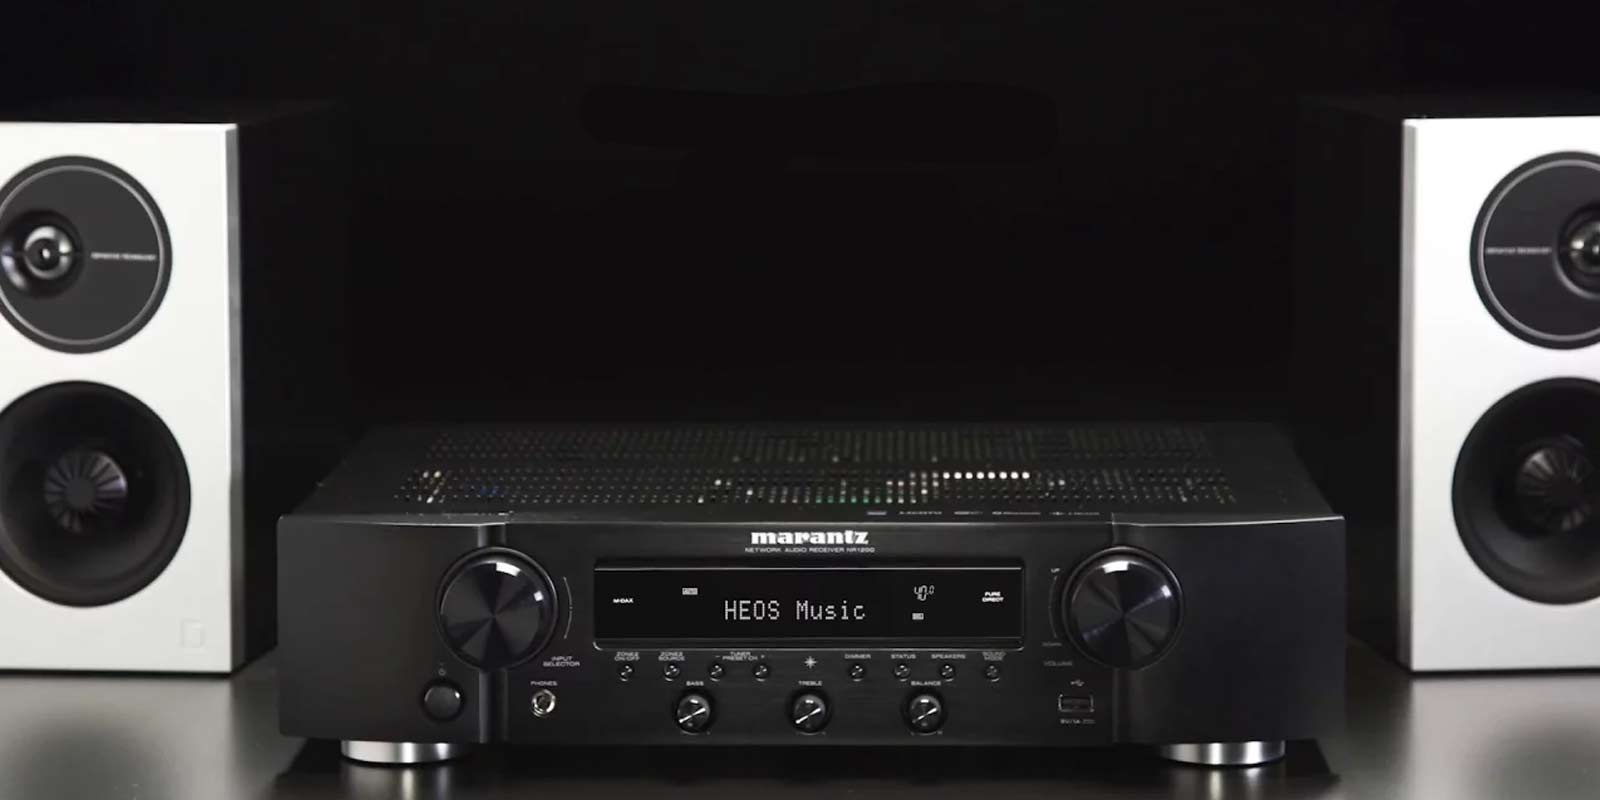 Marantz-NR1200-stereo-receiver-black-lifestyle